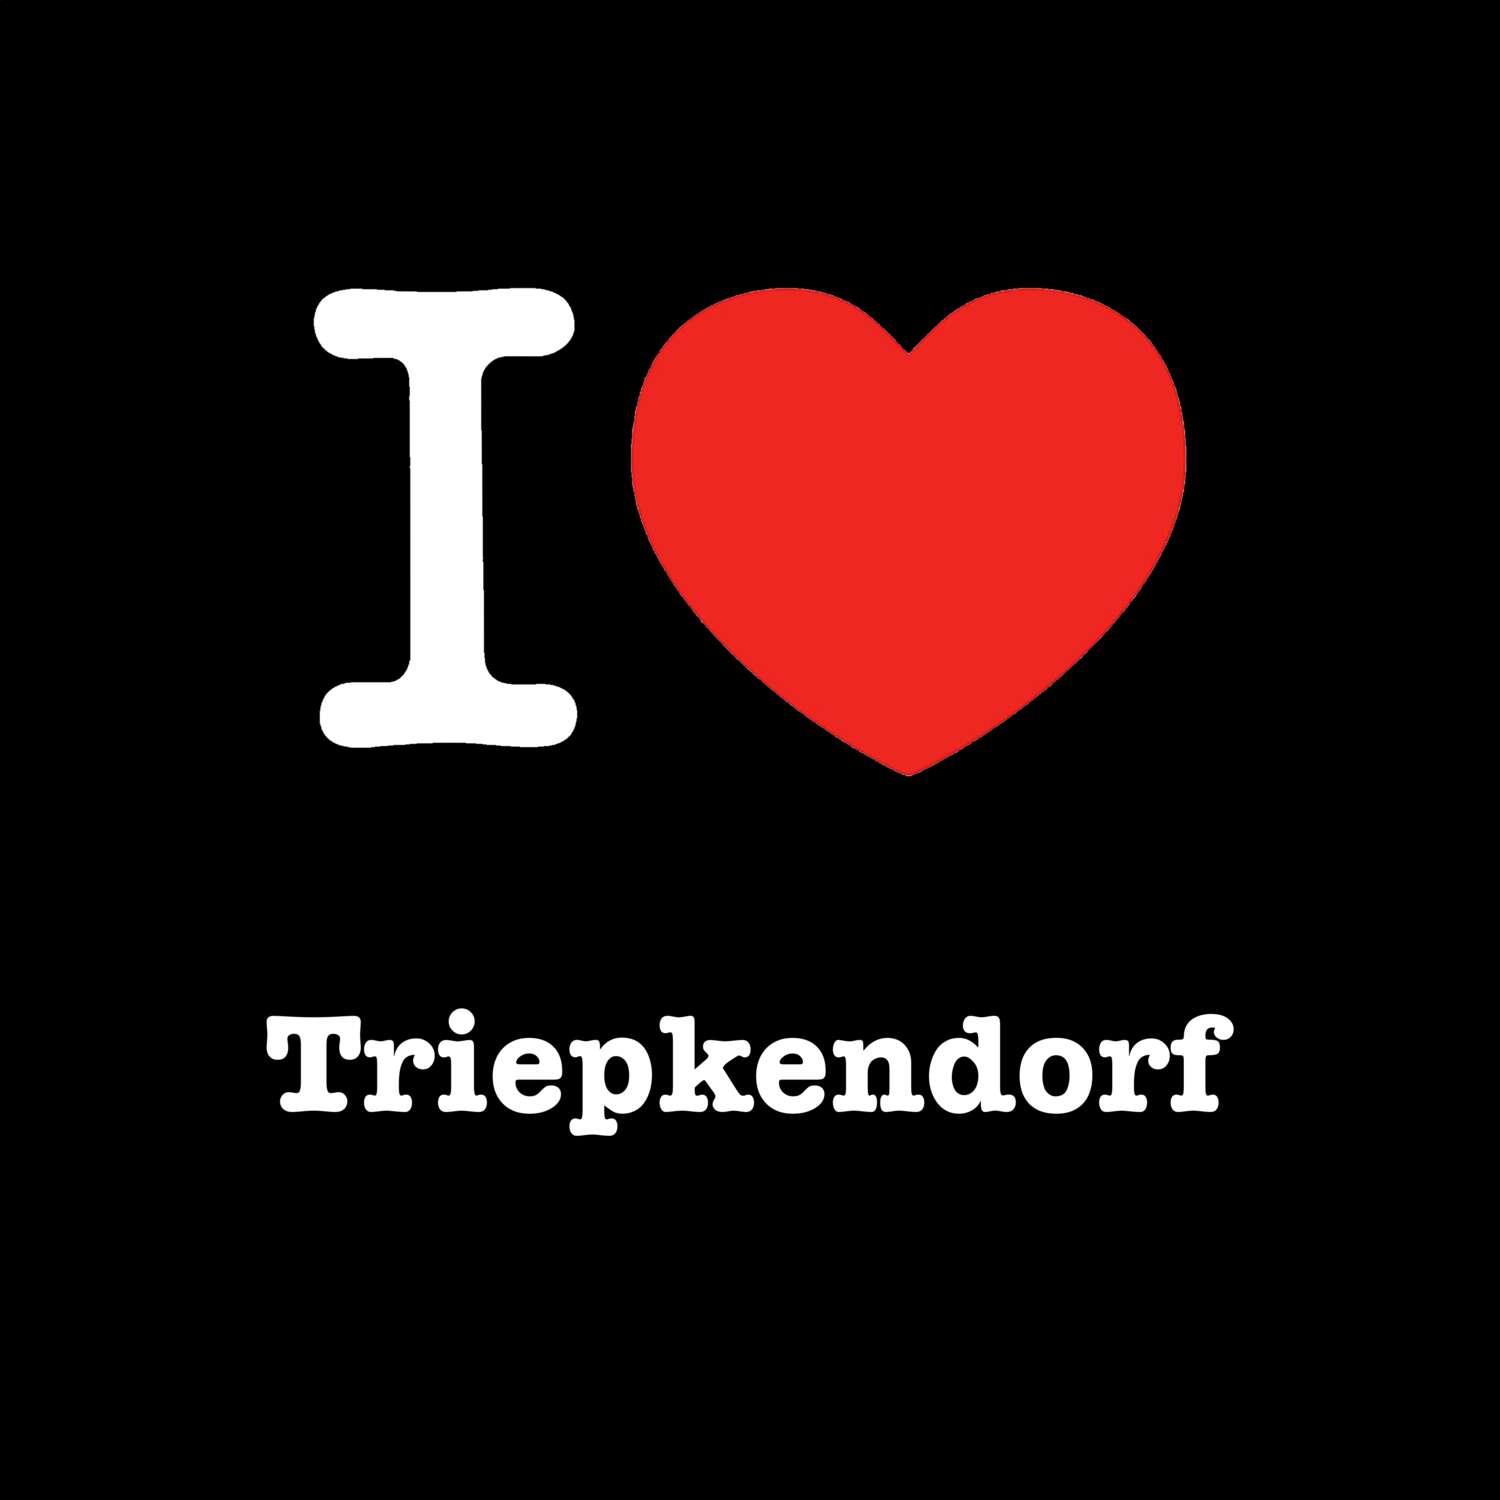 Triepkendorf T-Shirt »I love«